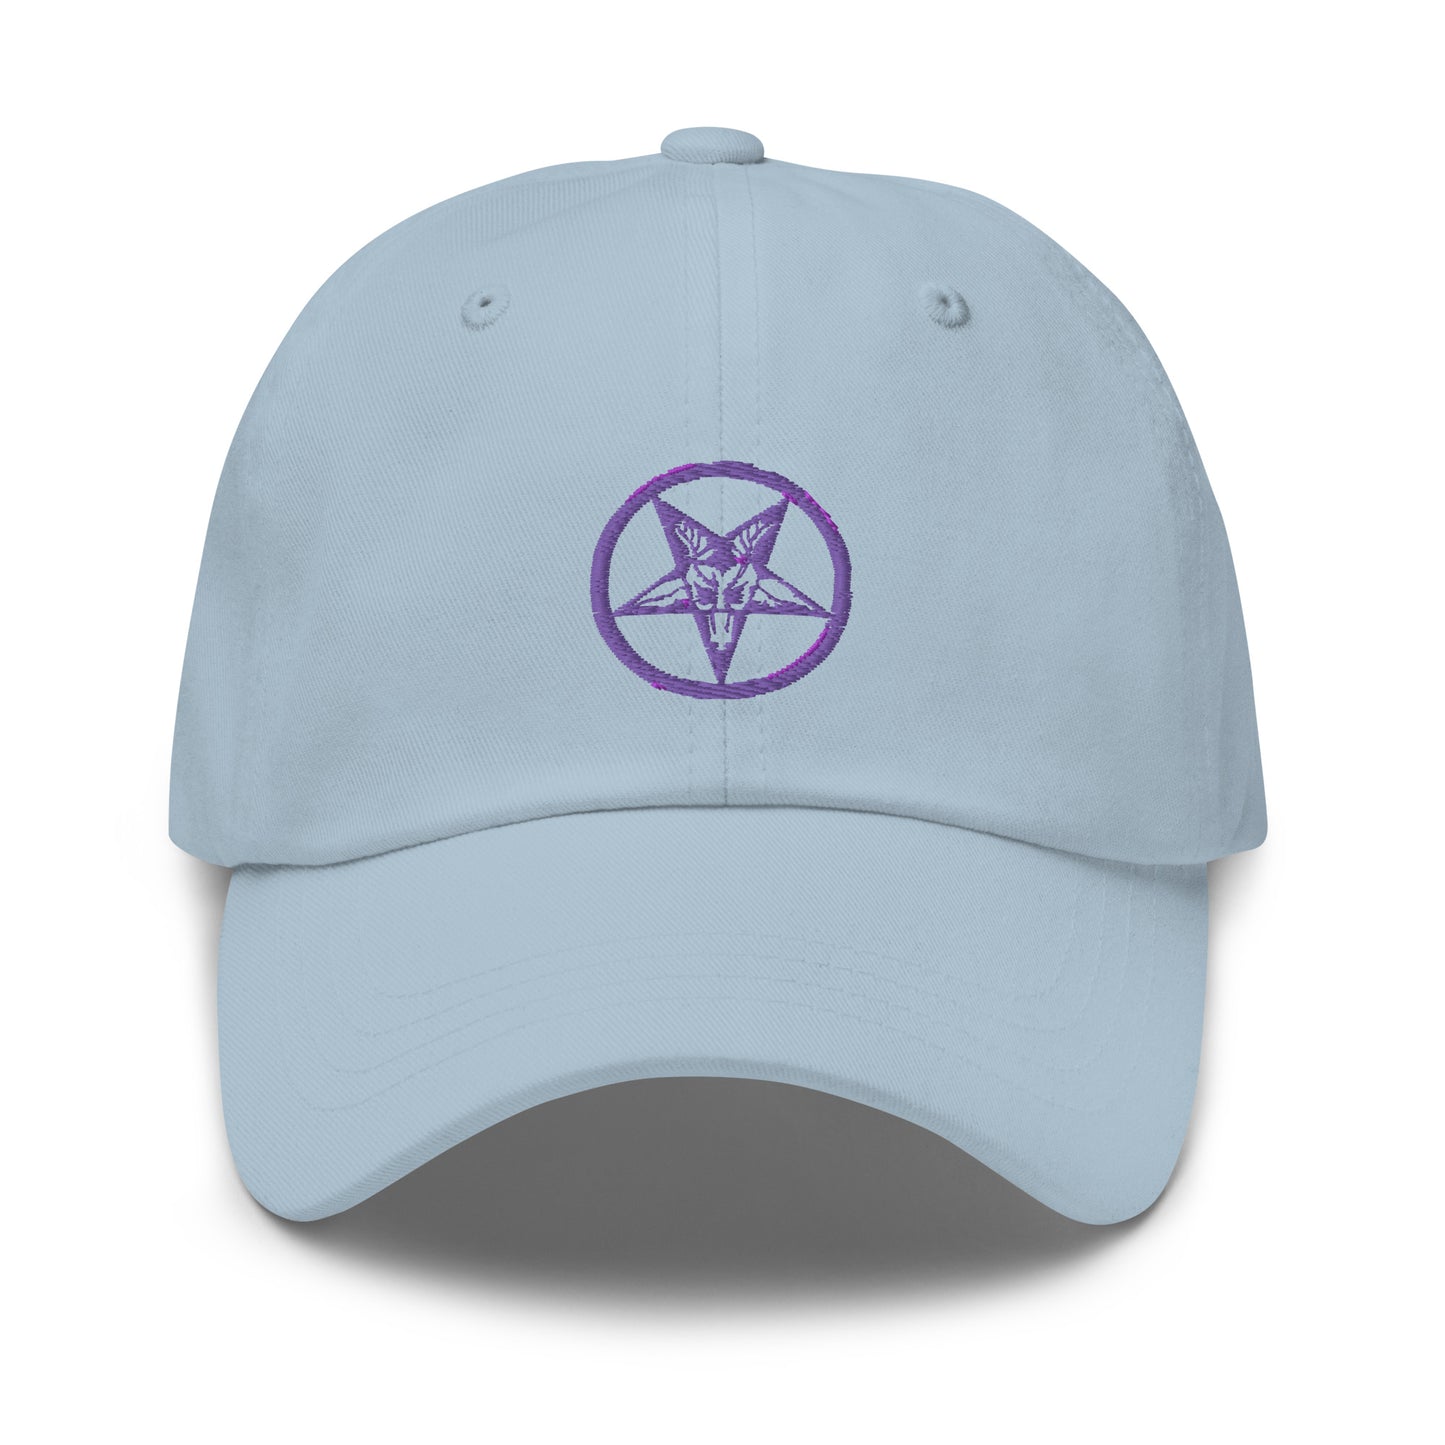 Pentagram Dad Hat